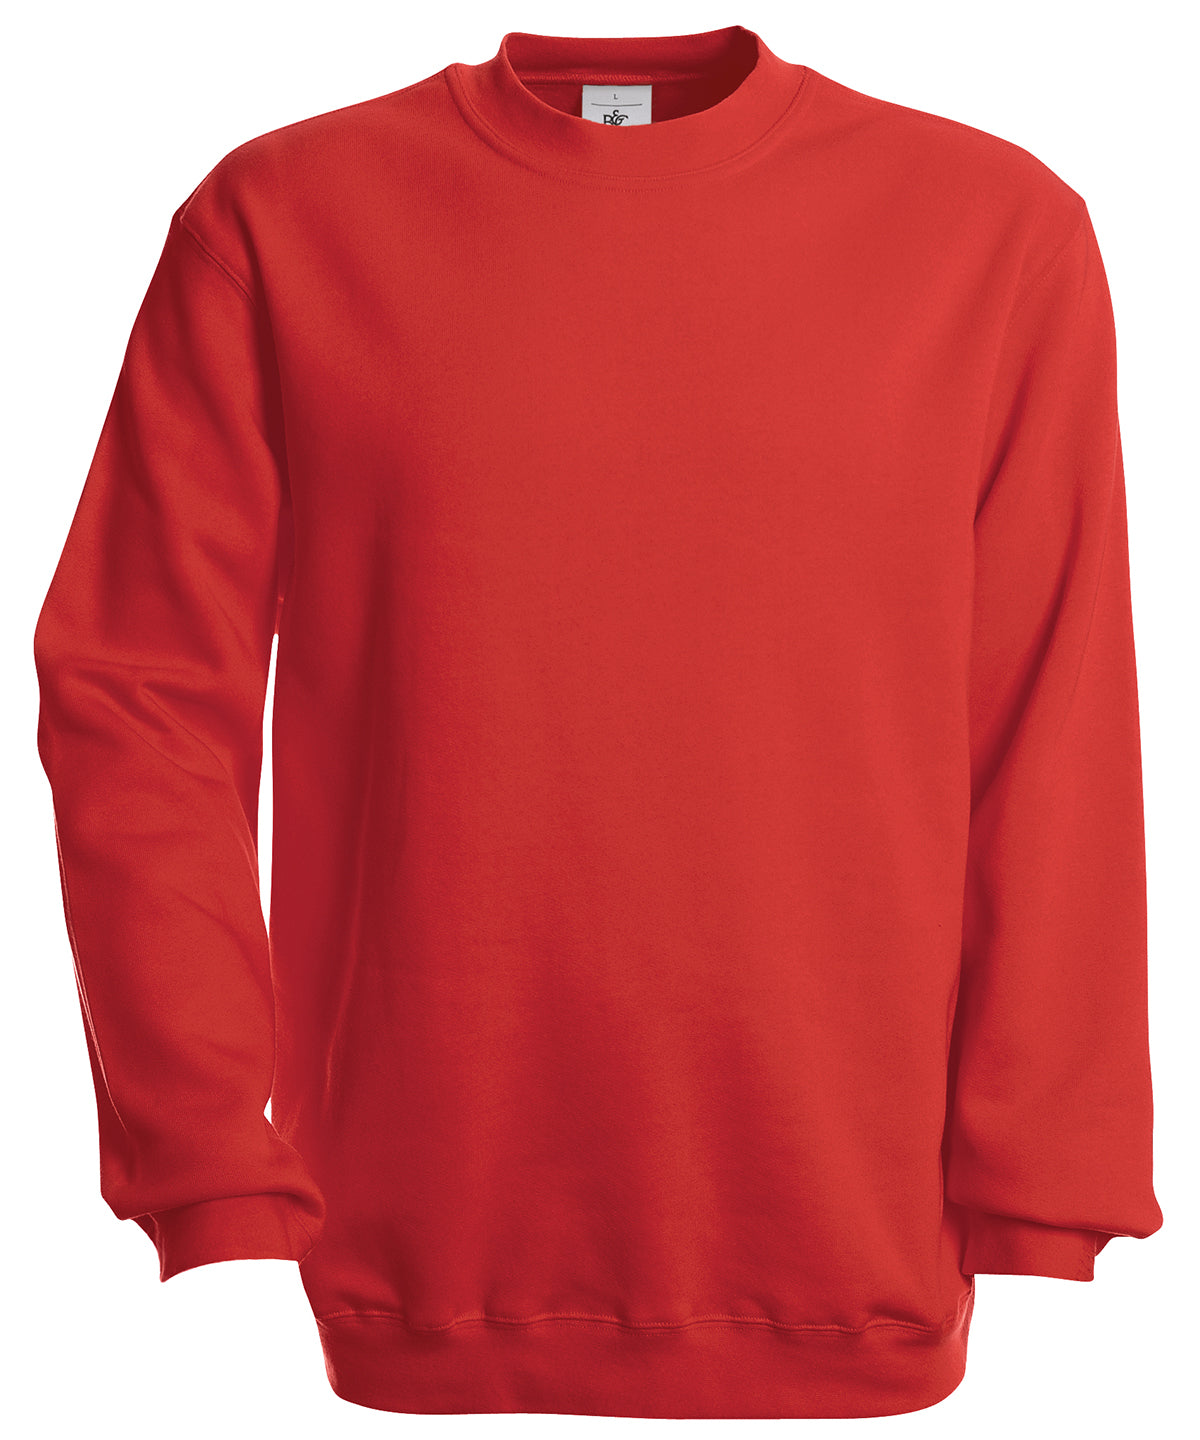 Personalised Sweatshirts - Black B&C Collection B&C Set-in sweatshirt